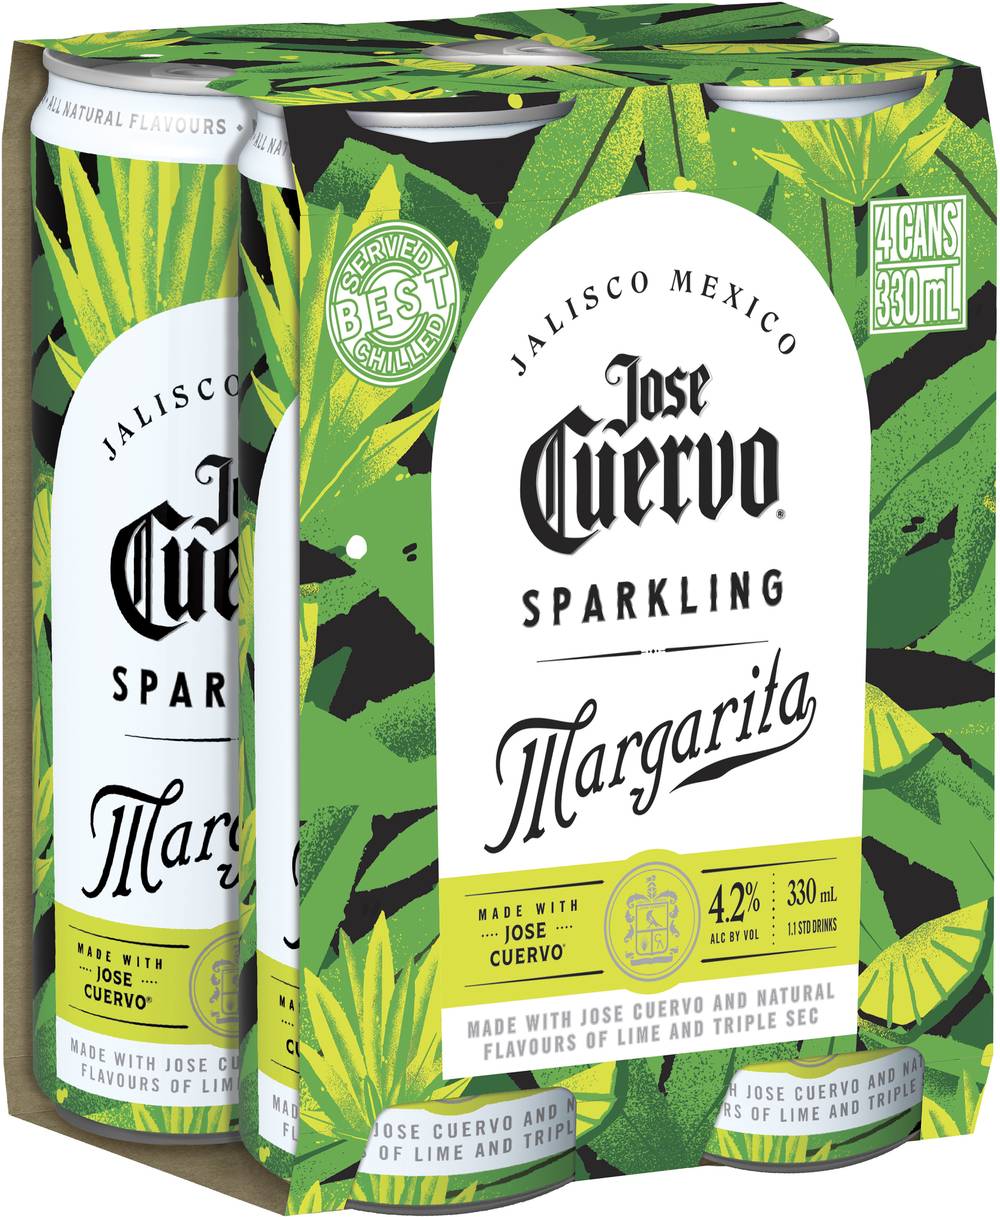 Jose Cuervo Sparkling Margarita 330ml X 4 pack